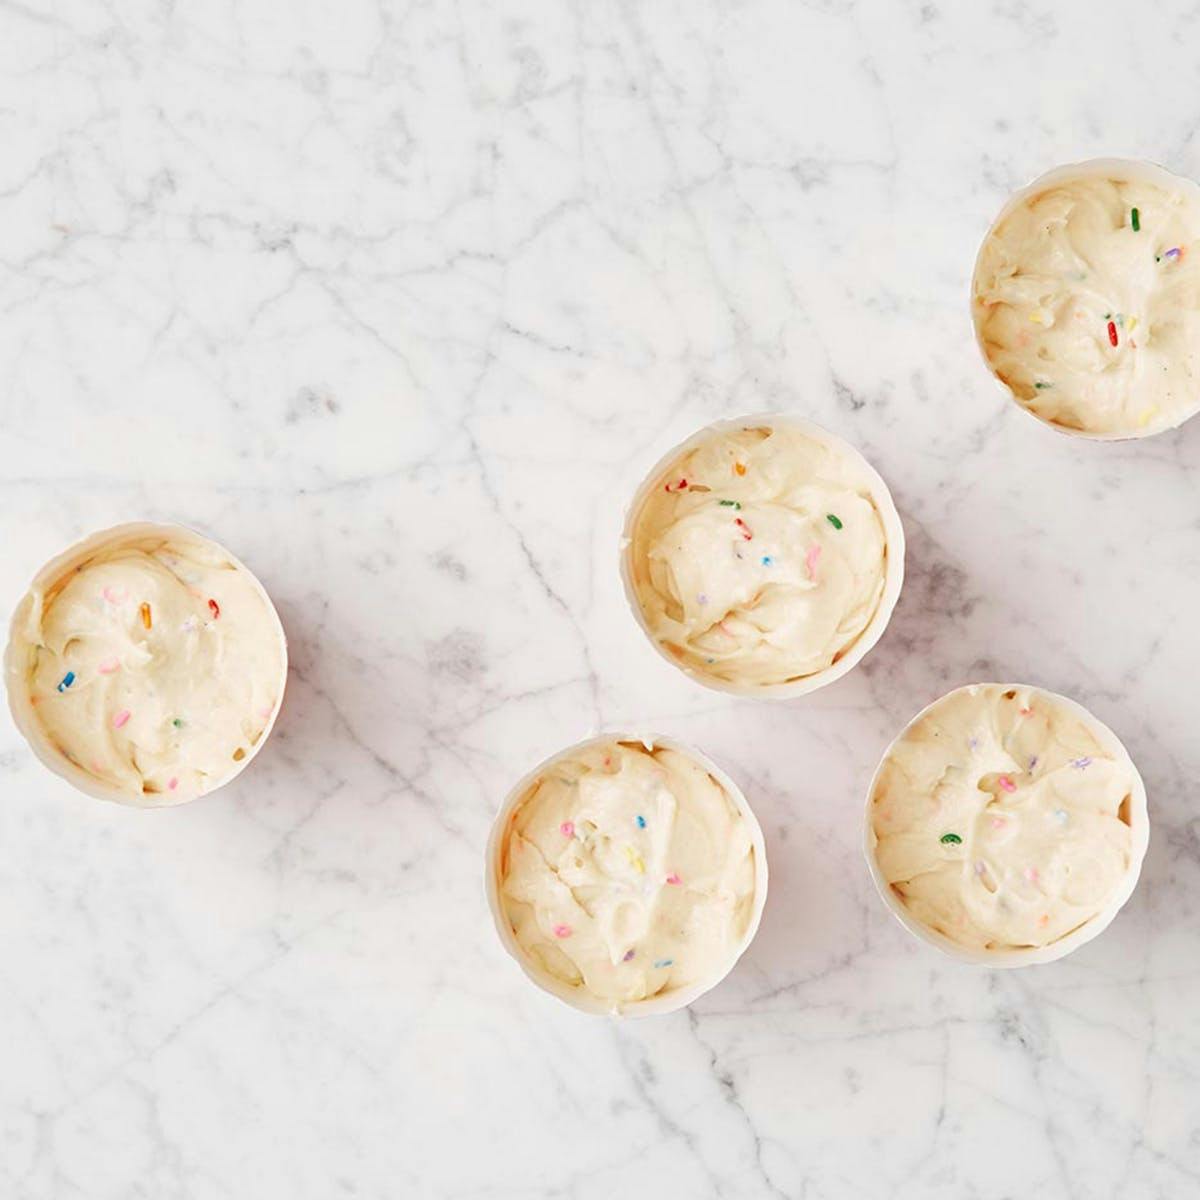 Sprinkles Sampler – Sprinkles Cupcakes, Inc